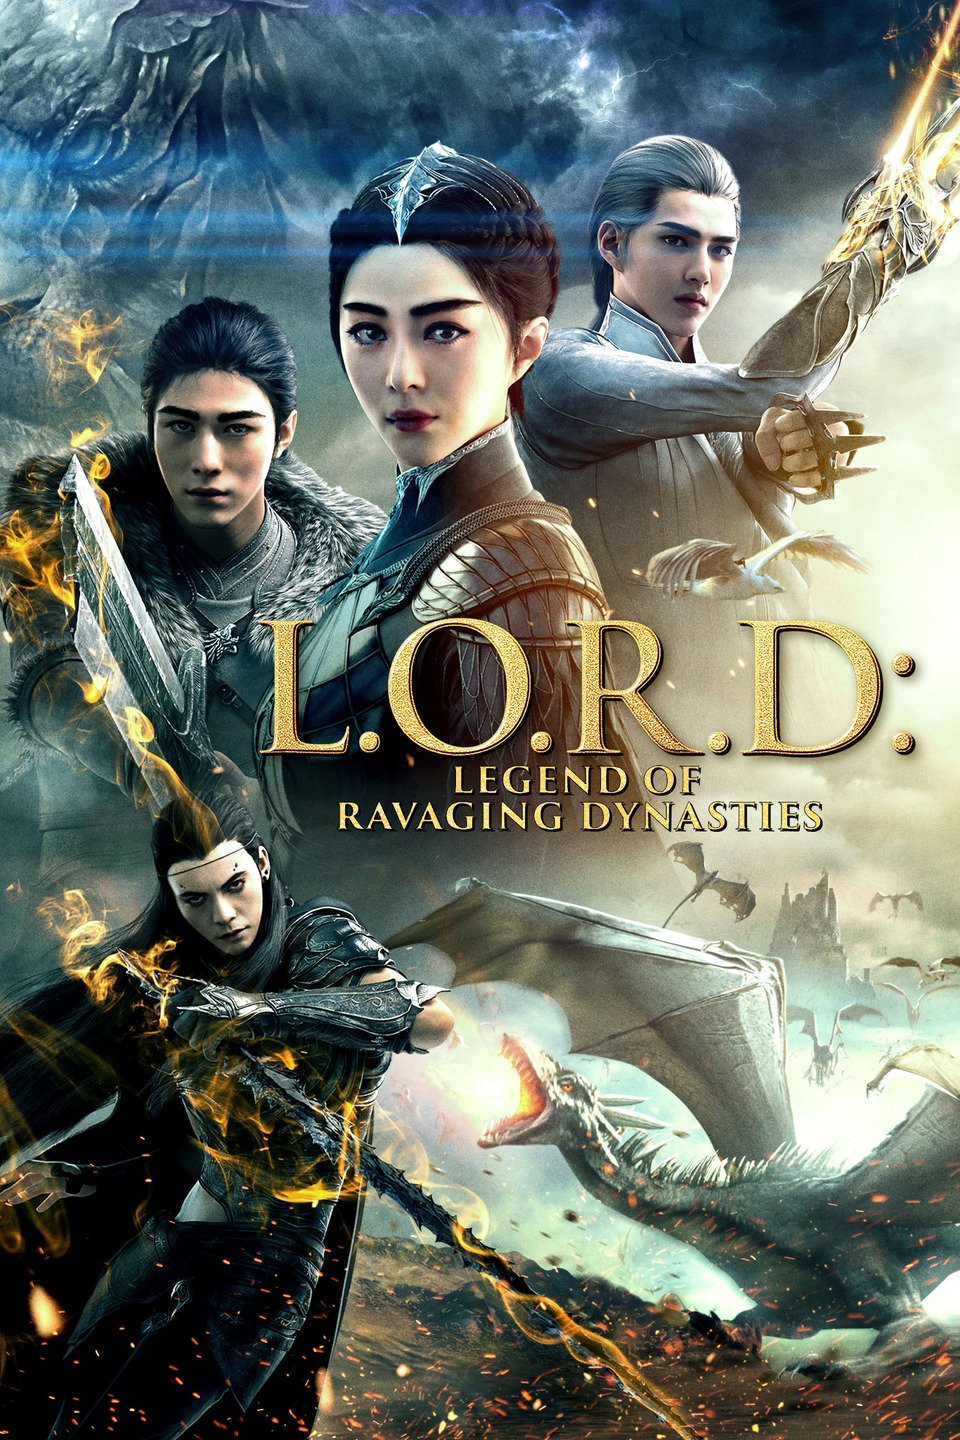 [MINI-HD] L.O.R.D: Legend of Ravaging Dynasties (2016) สงคราม 7 จอมเวทย์ [1080p] [พากย์ไทย 5.1 + จีน 5.1] [บรรยายไทย] [ซับจีน + อังกฤษ ฝัง] [ONE2UP]